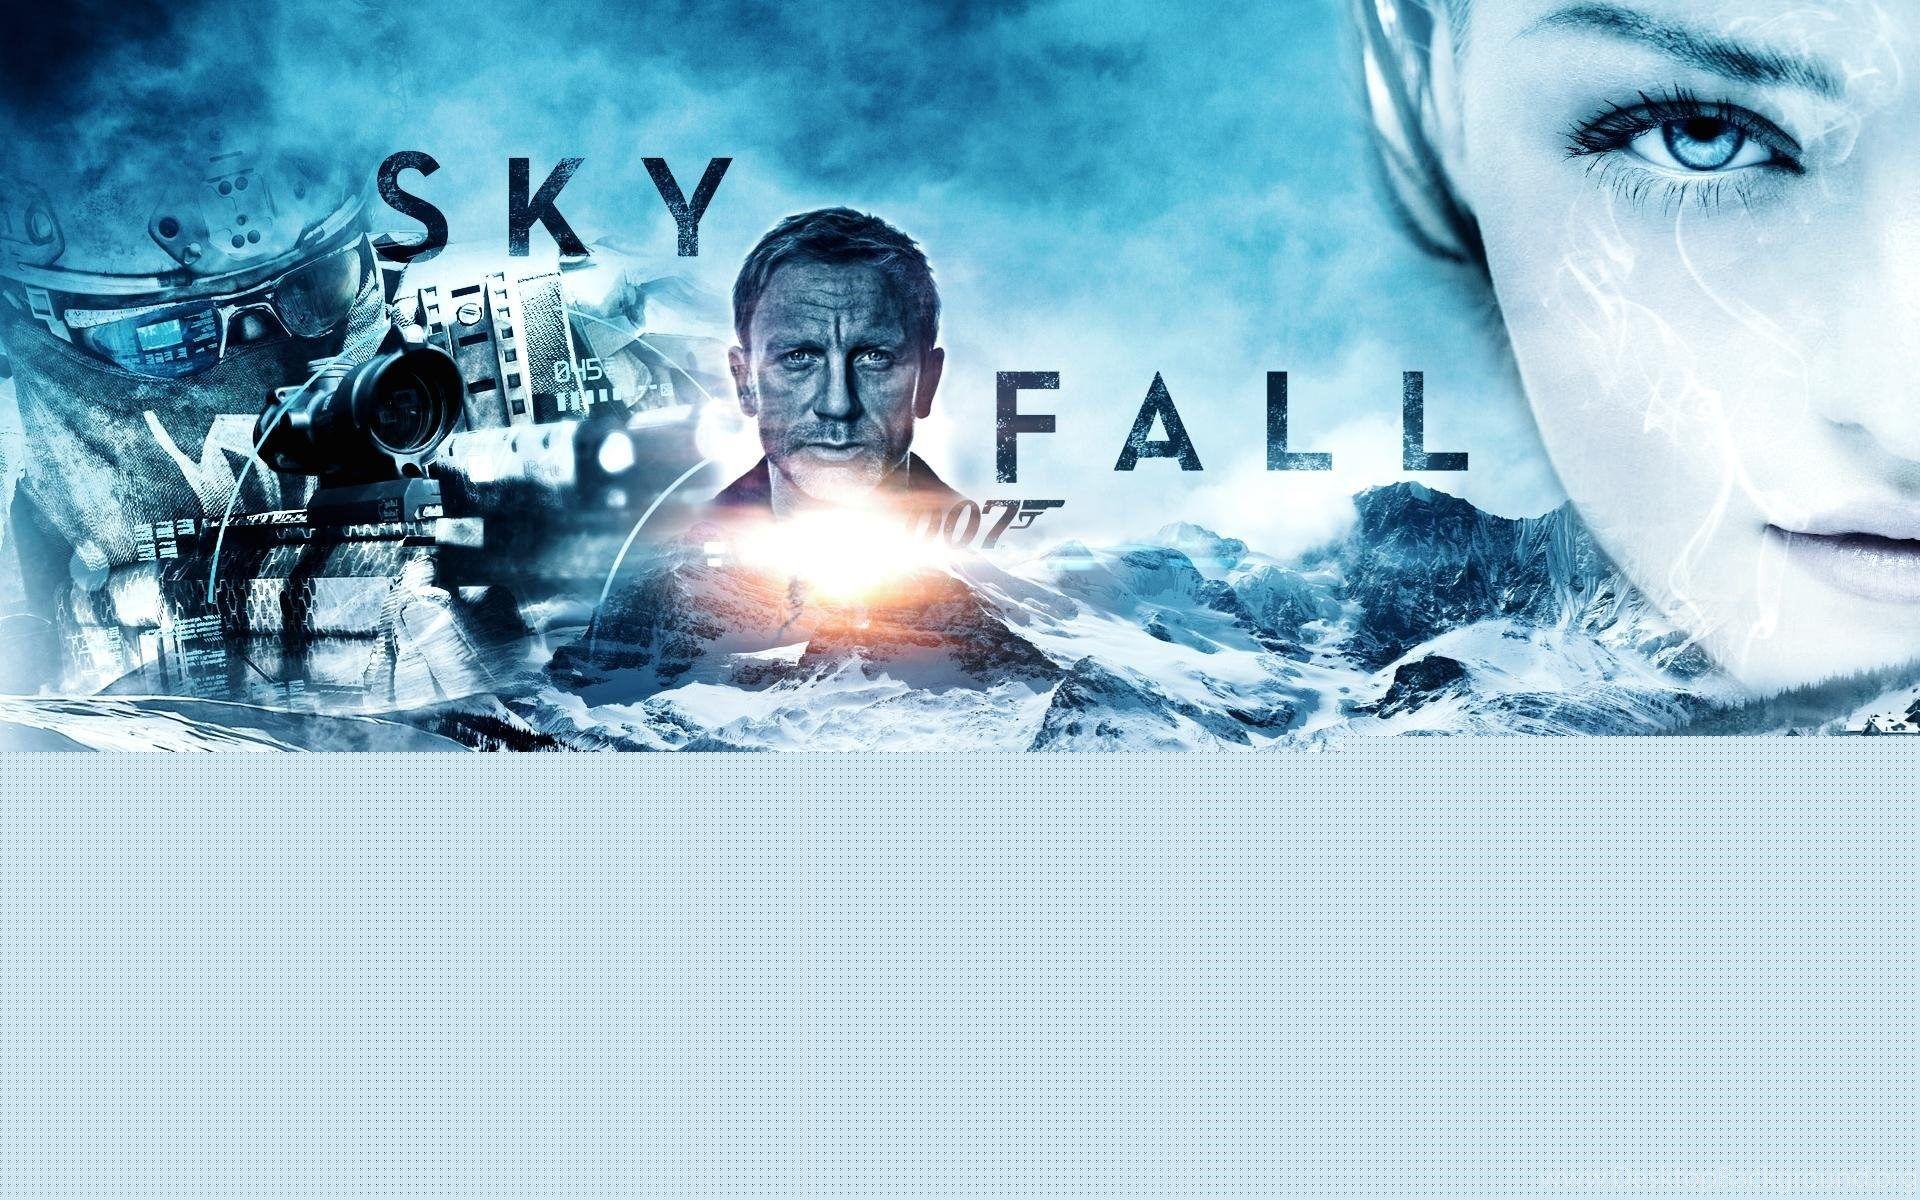 James Bond Skyfall 007 Wallpaper [2012] Desktop Background